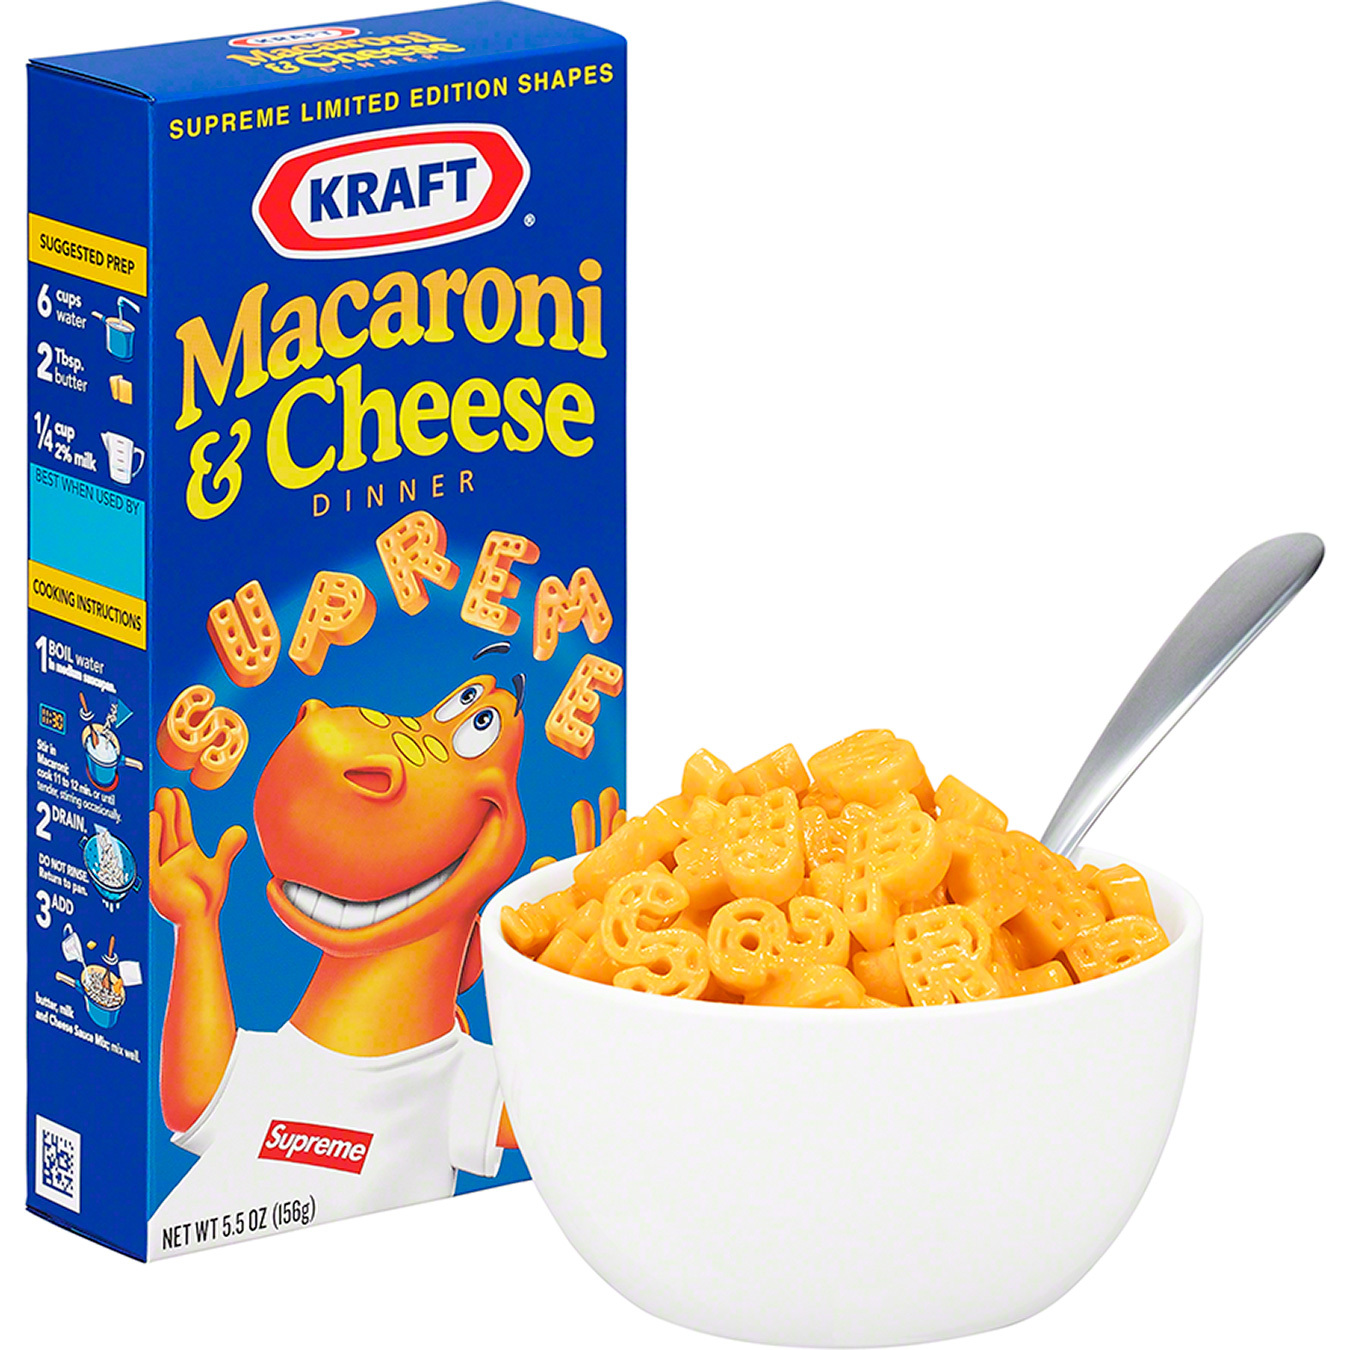 Supreme®/Kraft® Macaroni & Cheese (1 Box) | Supreme 22ss